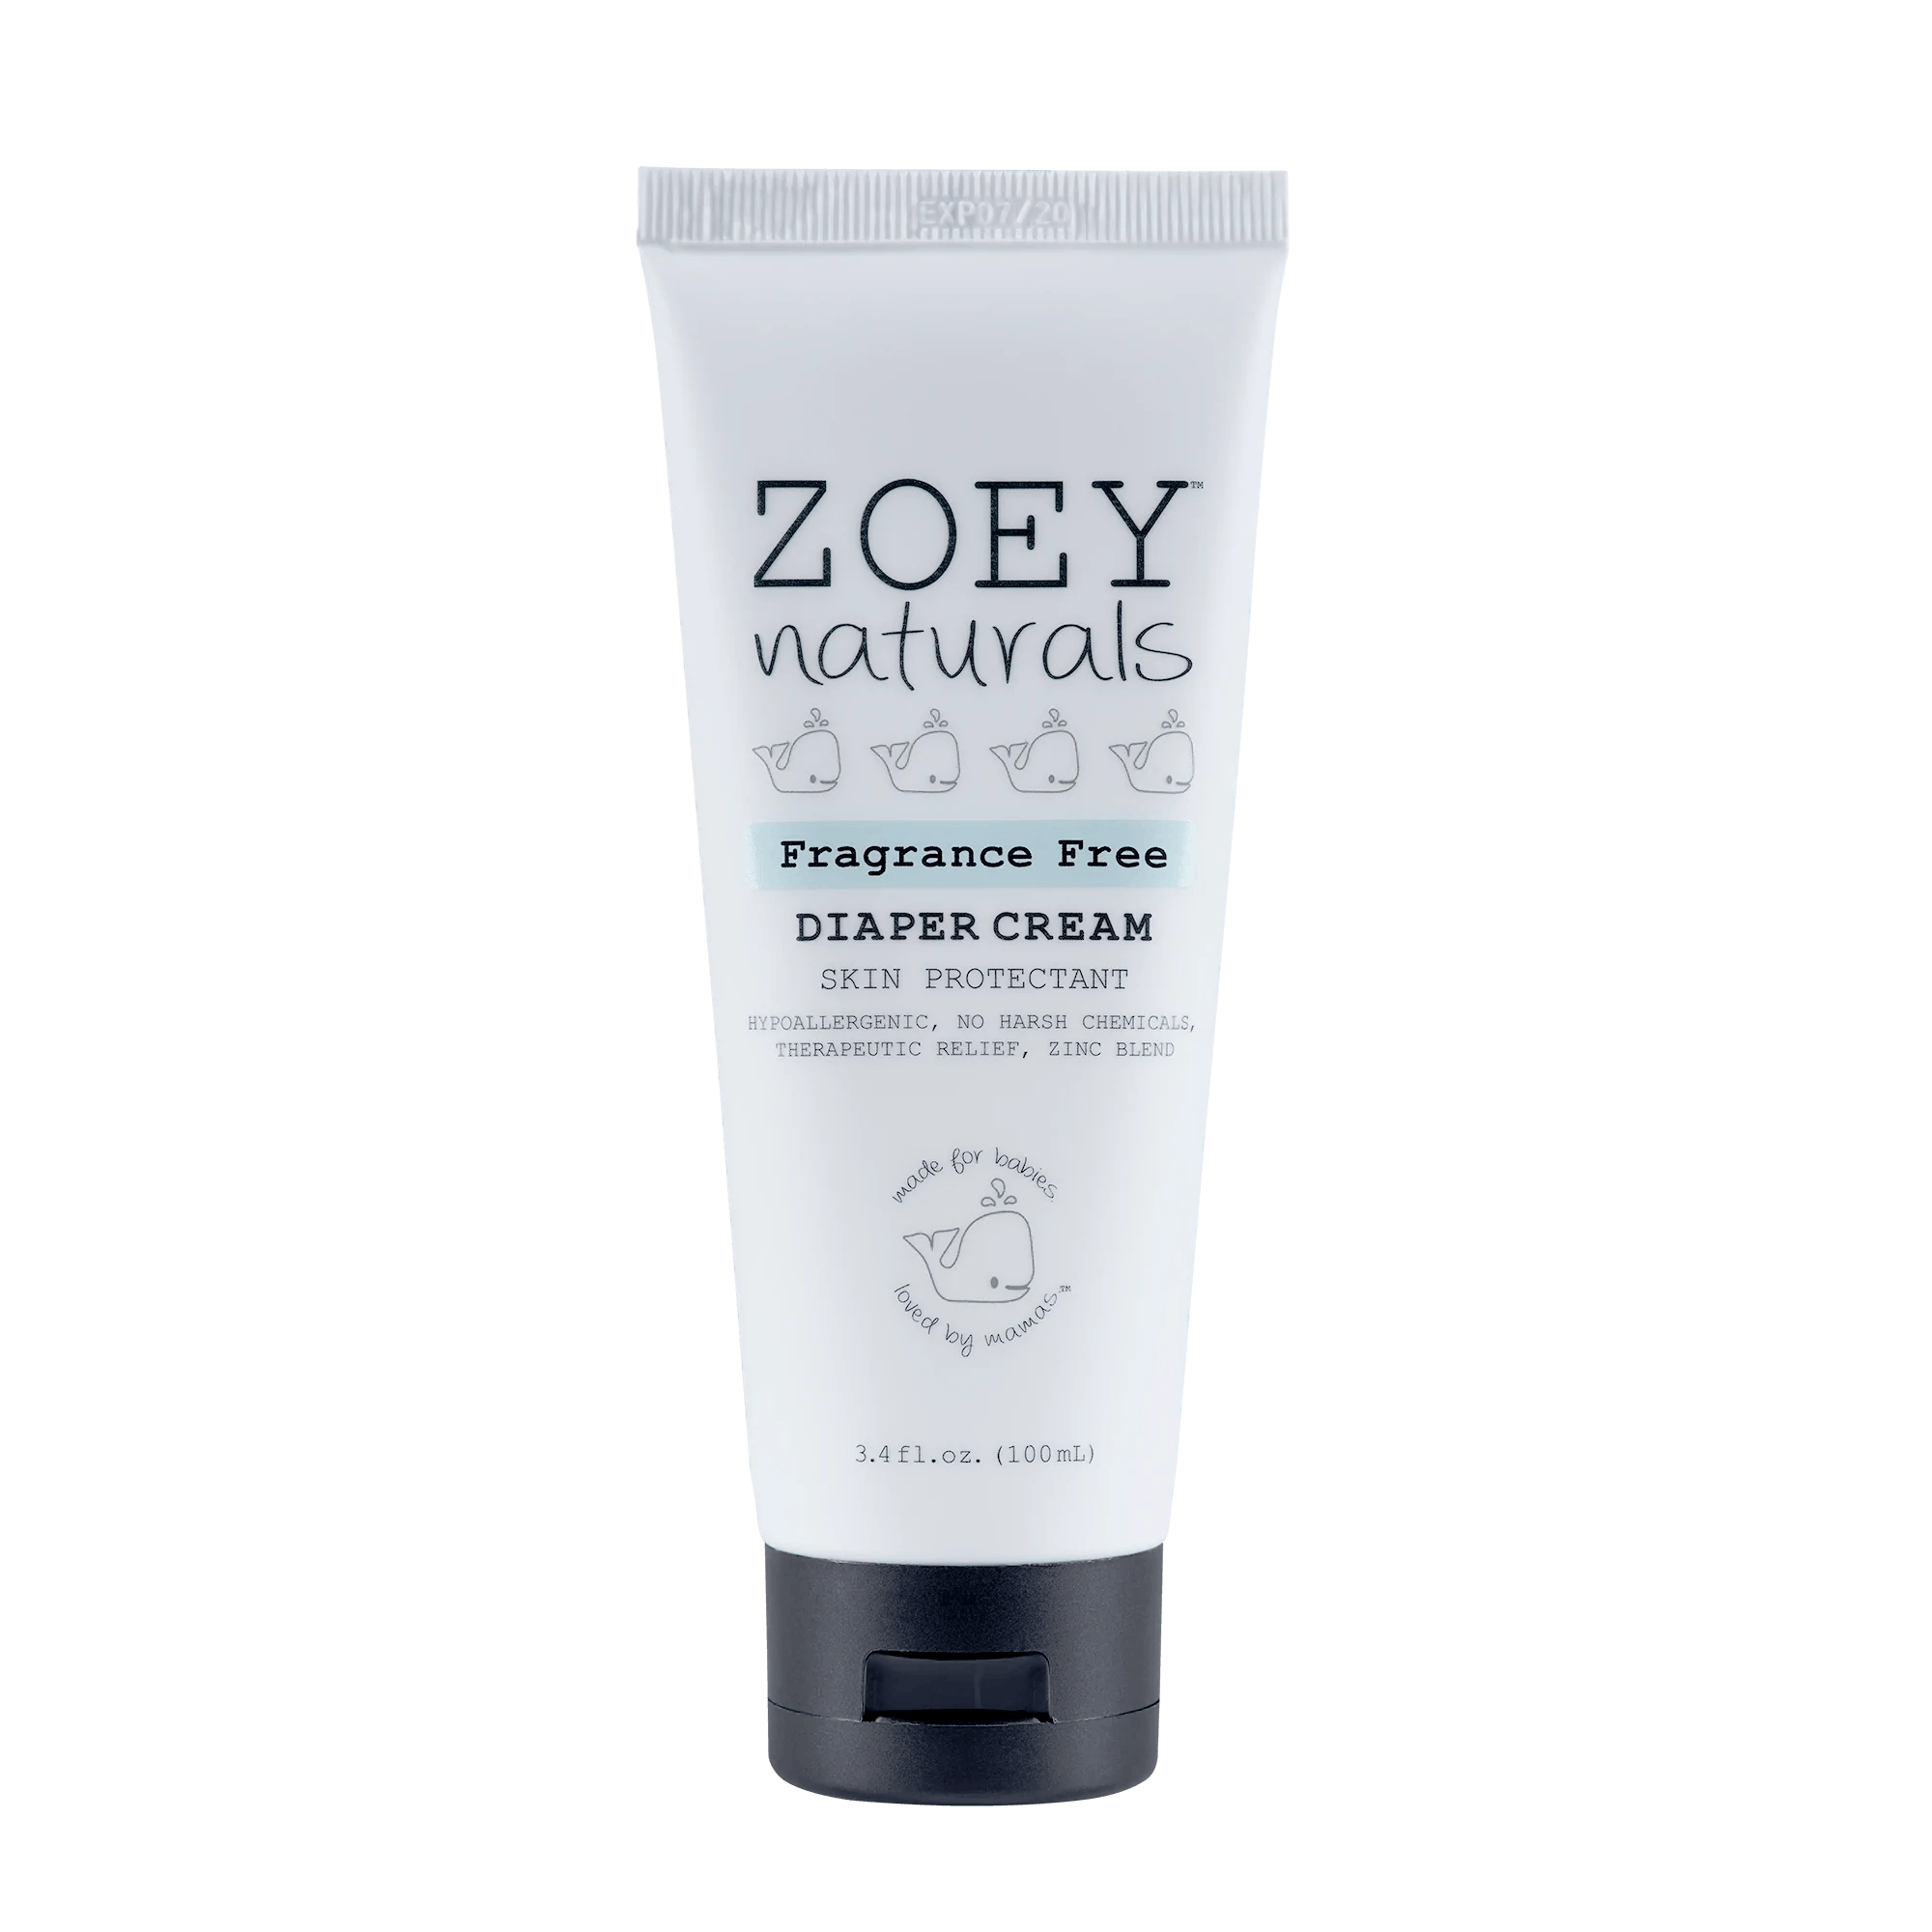 Zoey Naturals Diaper Cream Fragrance Free